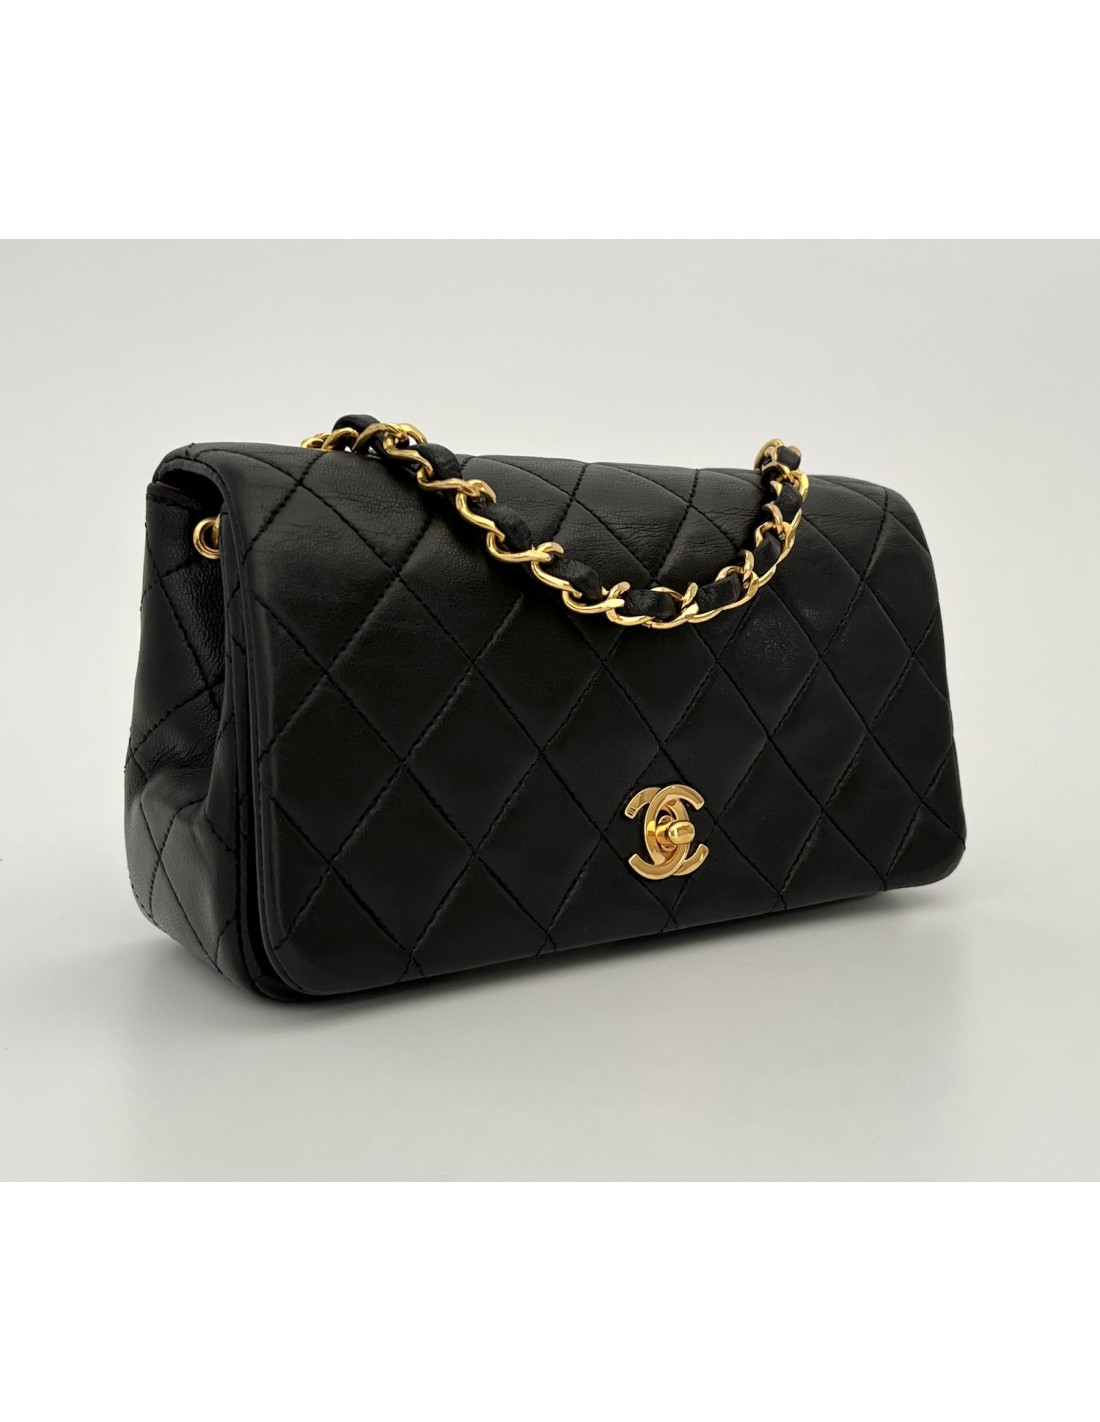 Karl Lagerfeld's holy Chanel handbag trinity - Telegraph